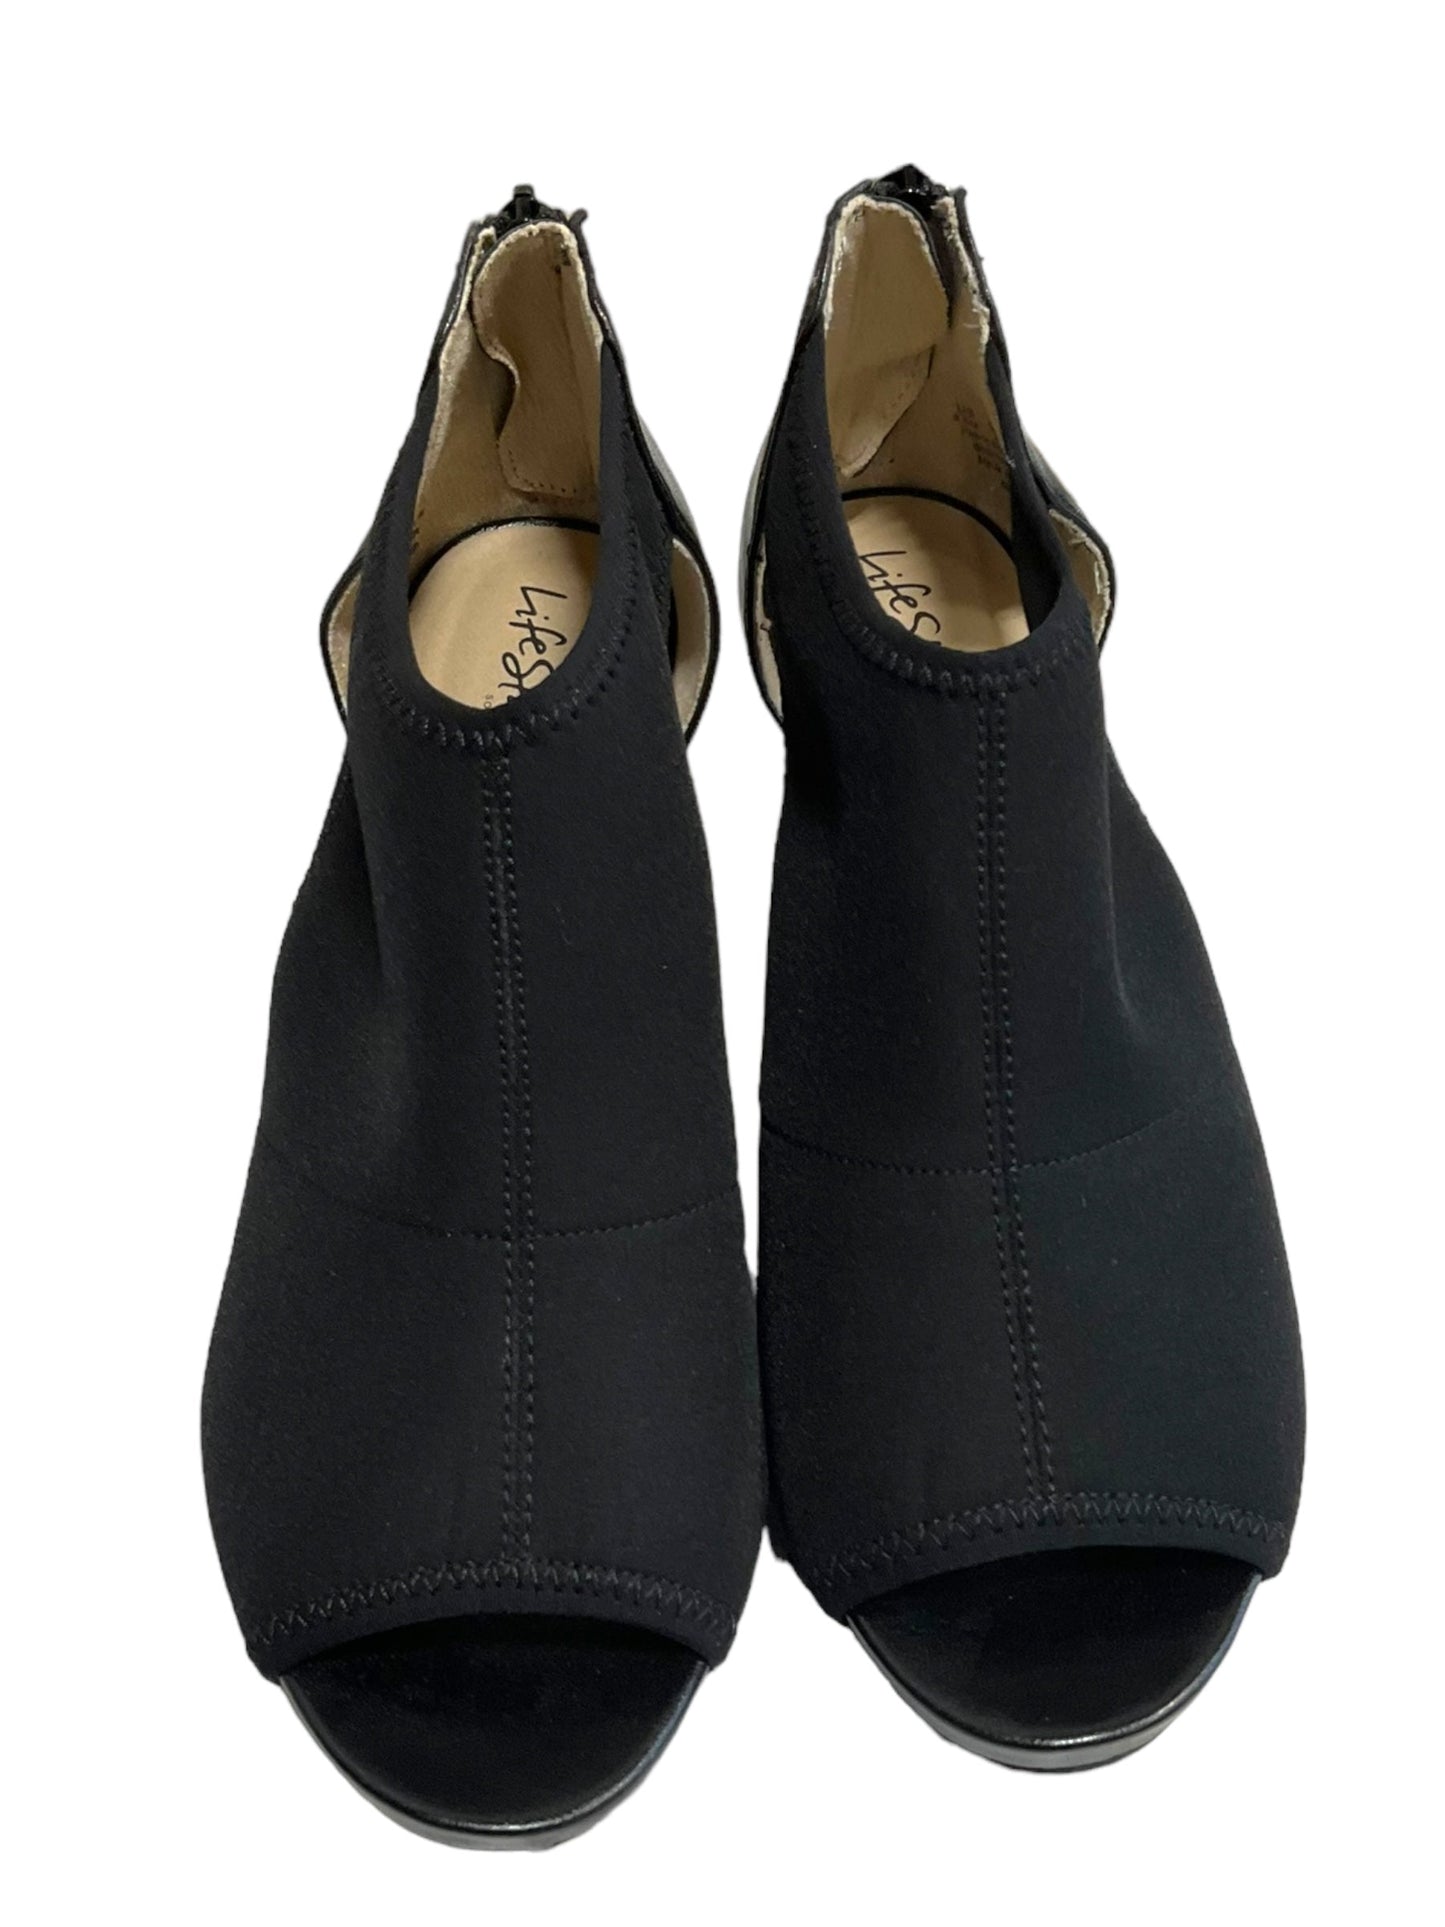 Black Shoes Heels Stiletto Life Stride, Size 8.5